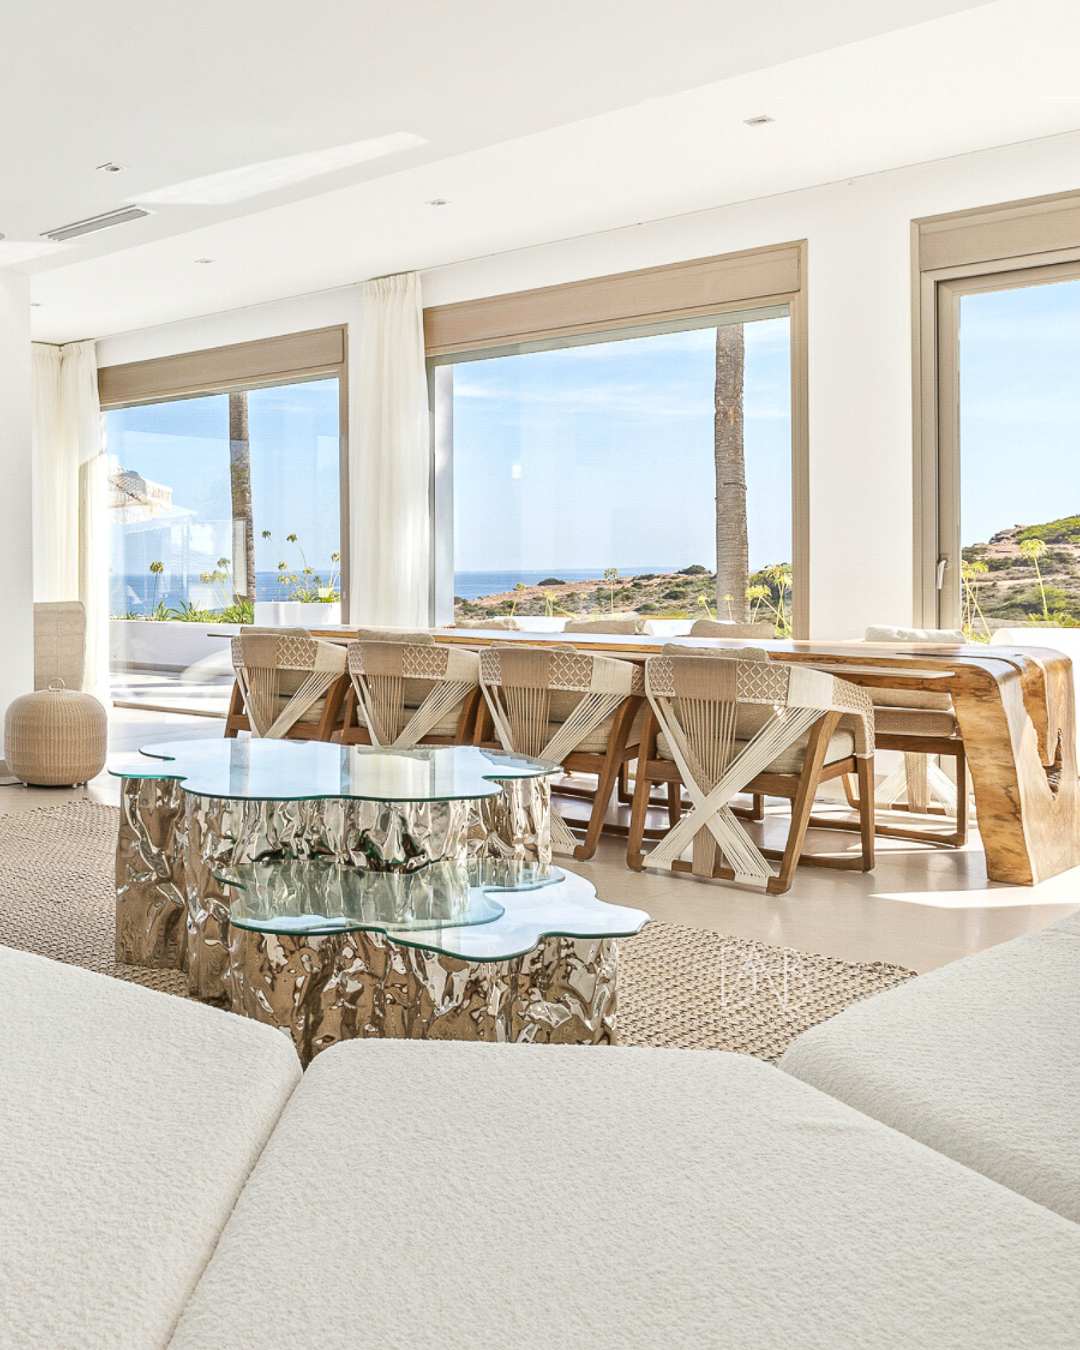 Indulge in opulent luxury with stunning resort interior design.